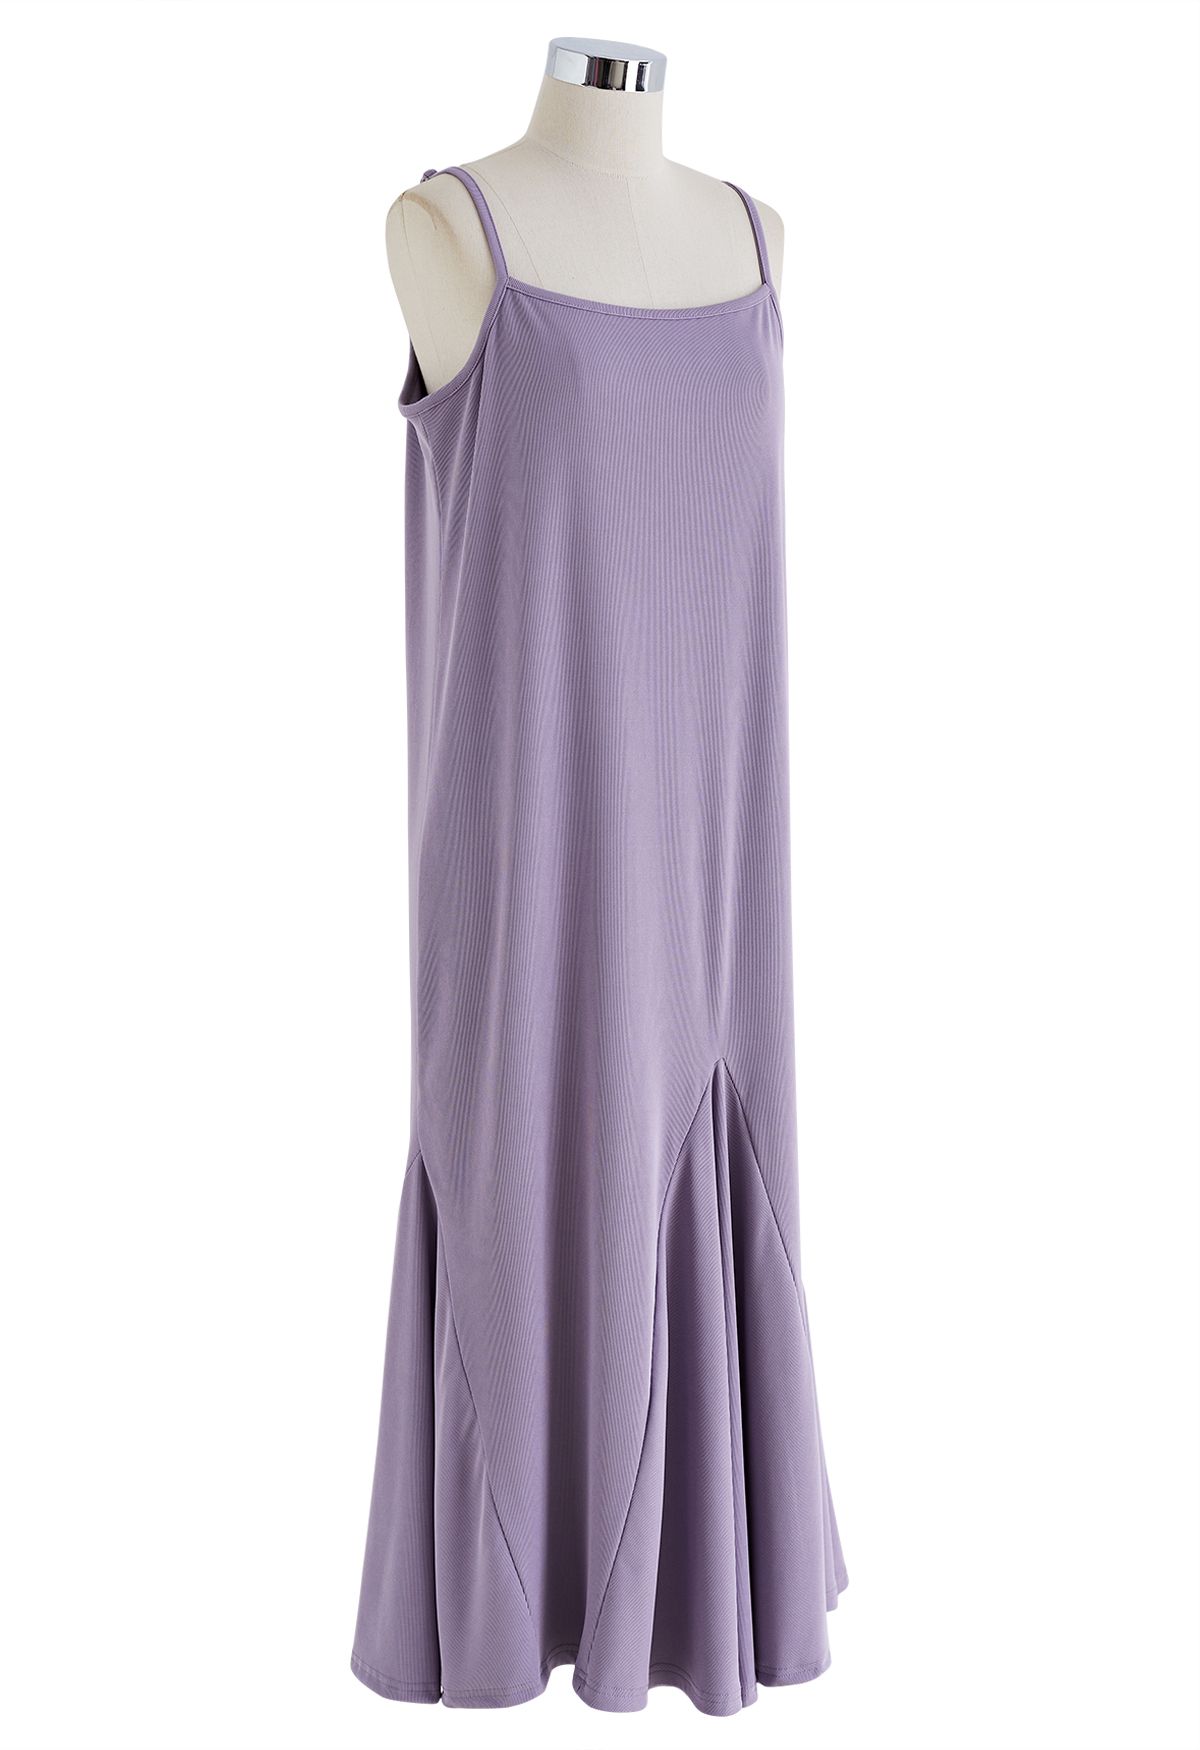 Plain Color Frilling Hem Cami Dress in Lilac